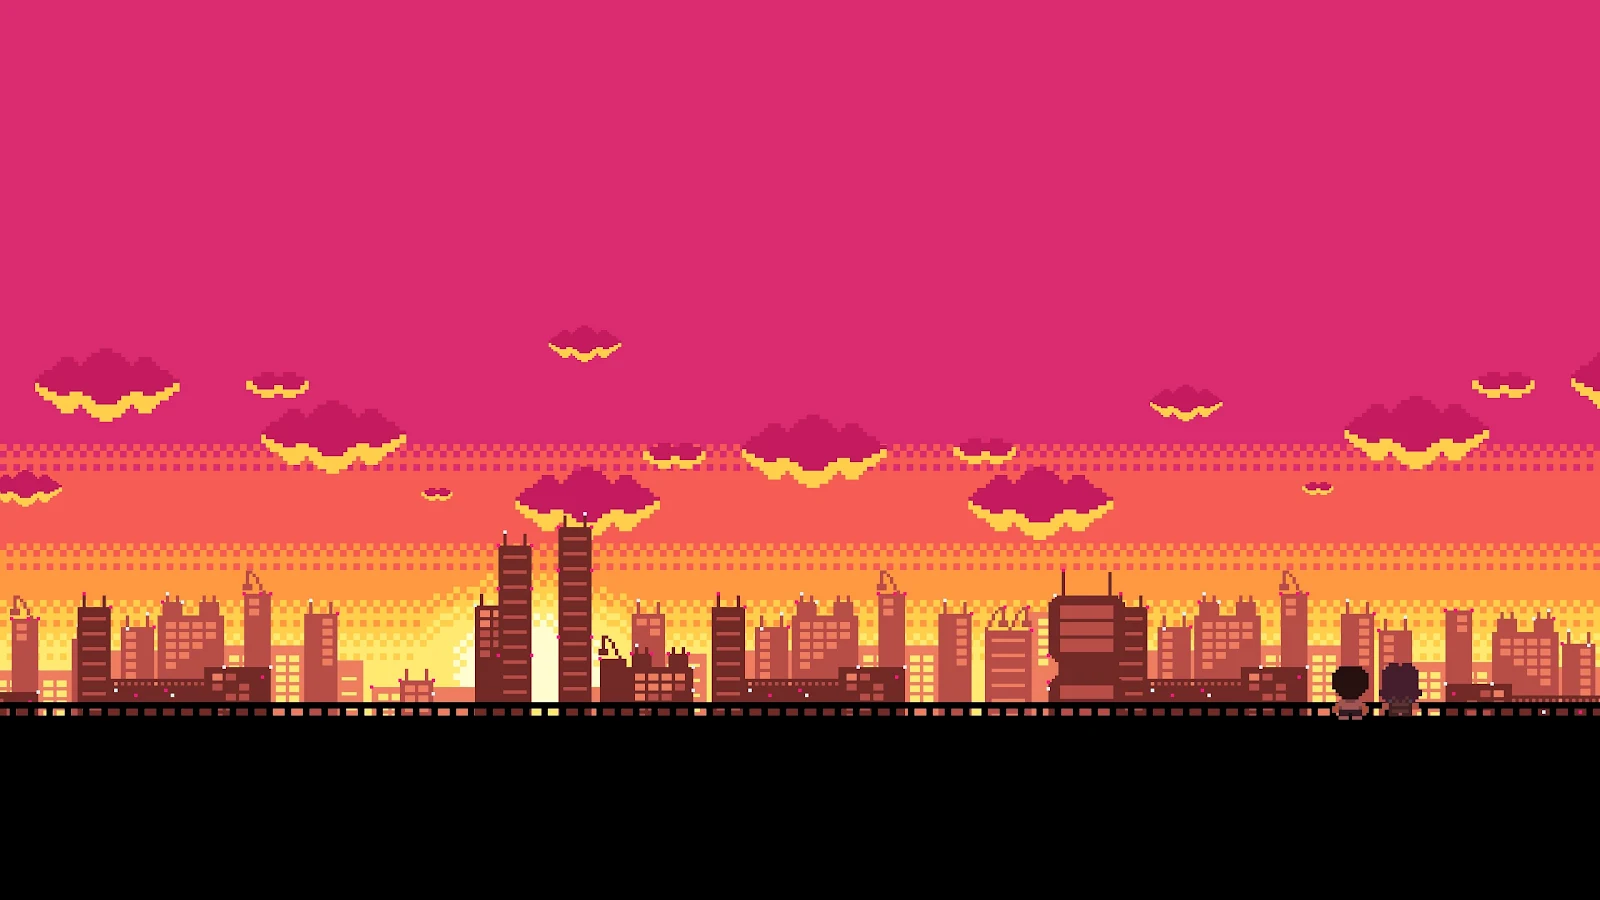 A Stunning Neon Genesis Evangelion, Pixel Art, Sunset, City 4K Desktop and Mobile Wallpaper Background (3840x2160)